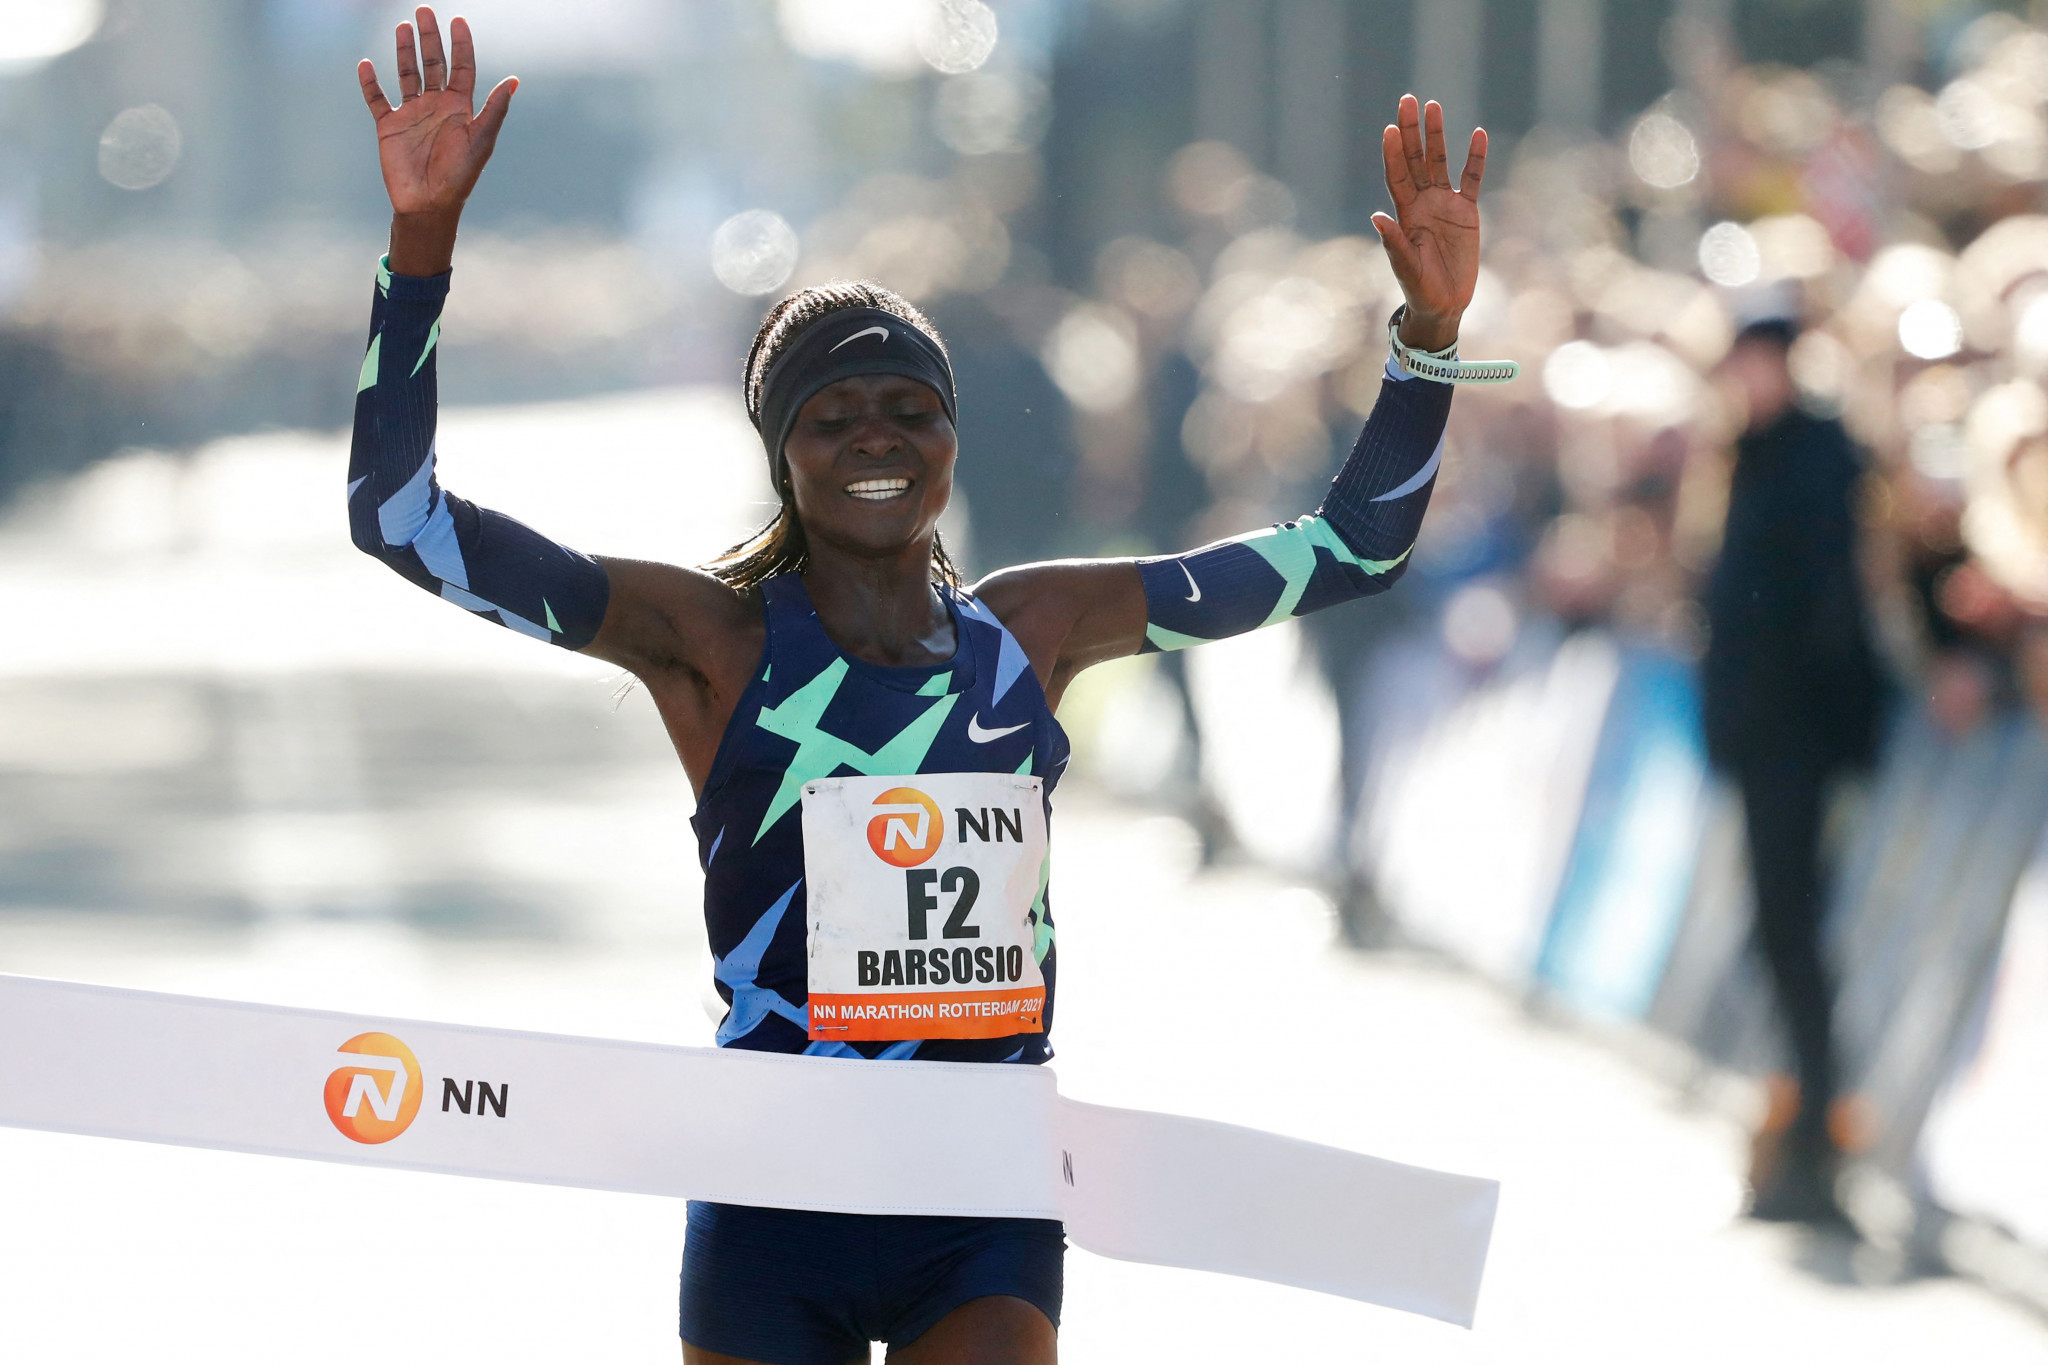 Rotterdam champion Barsosio leads Kenyan marathon team for Birmingham 2022